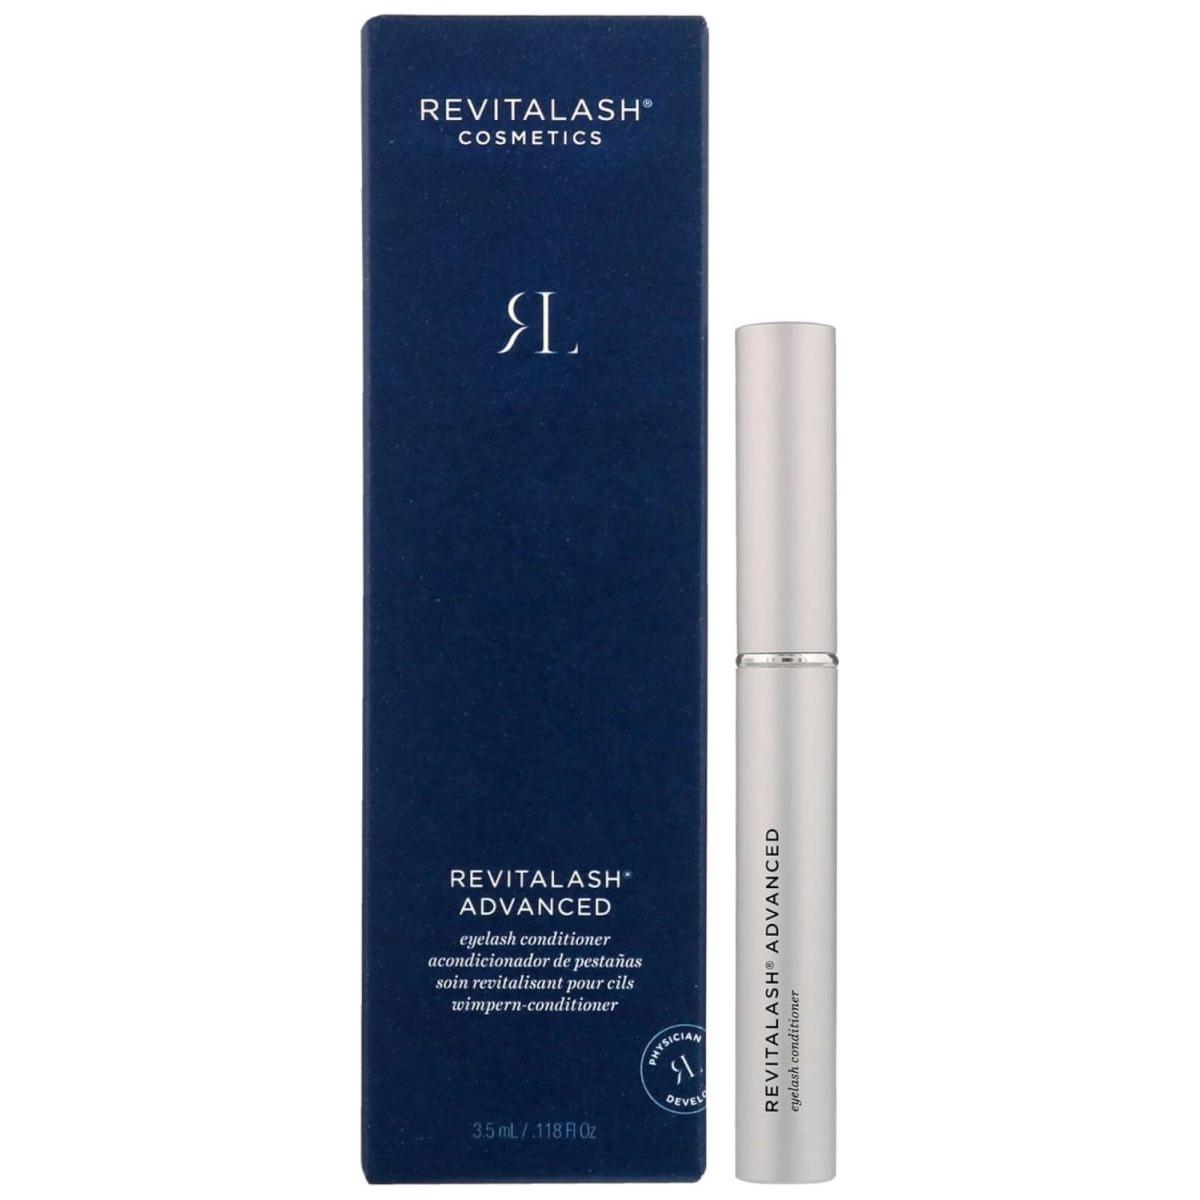 Revitalash Advanced Eyelash Conditioner, 3.5 ml. - Glam Global UK